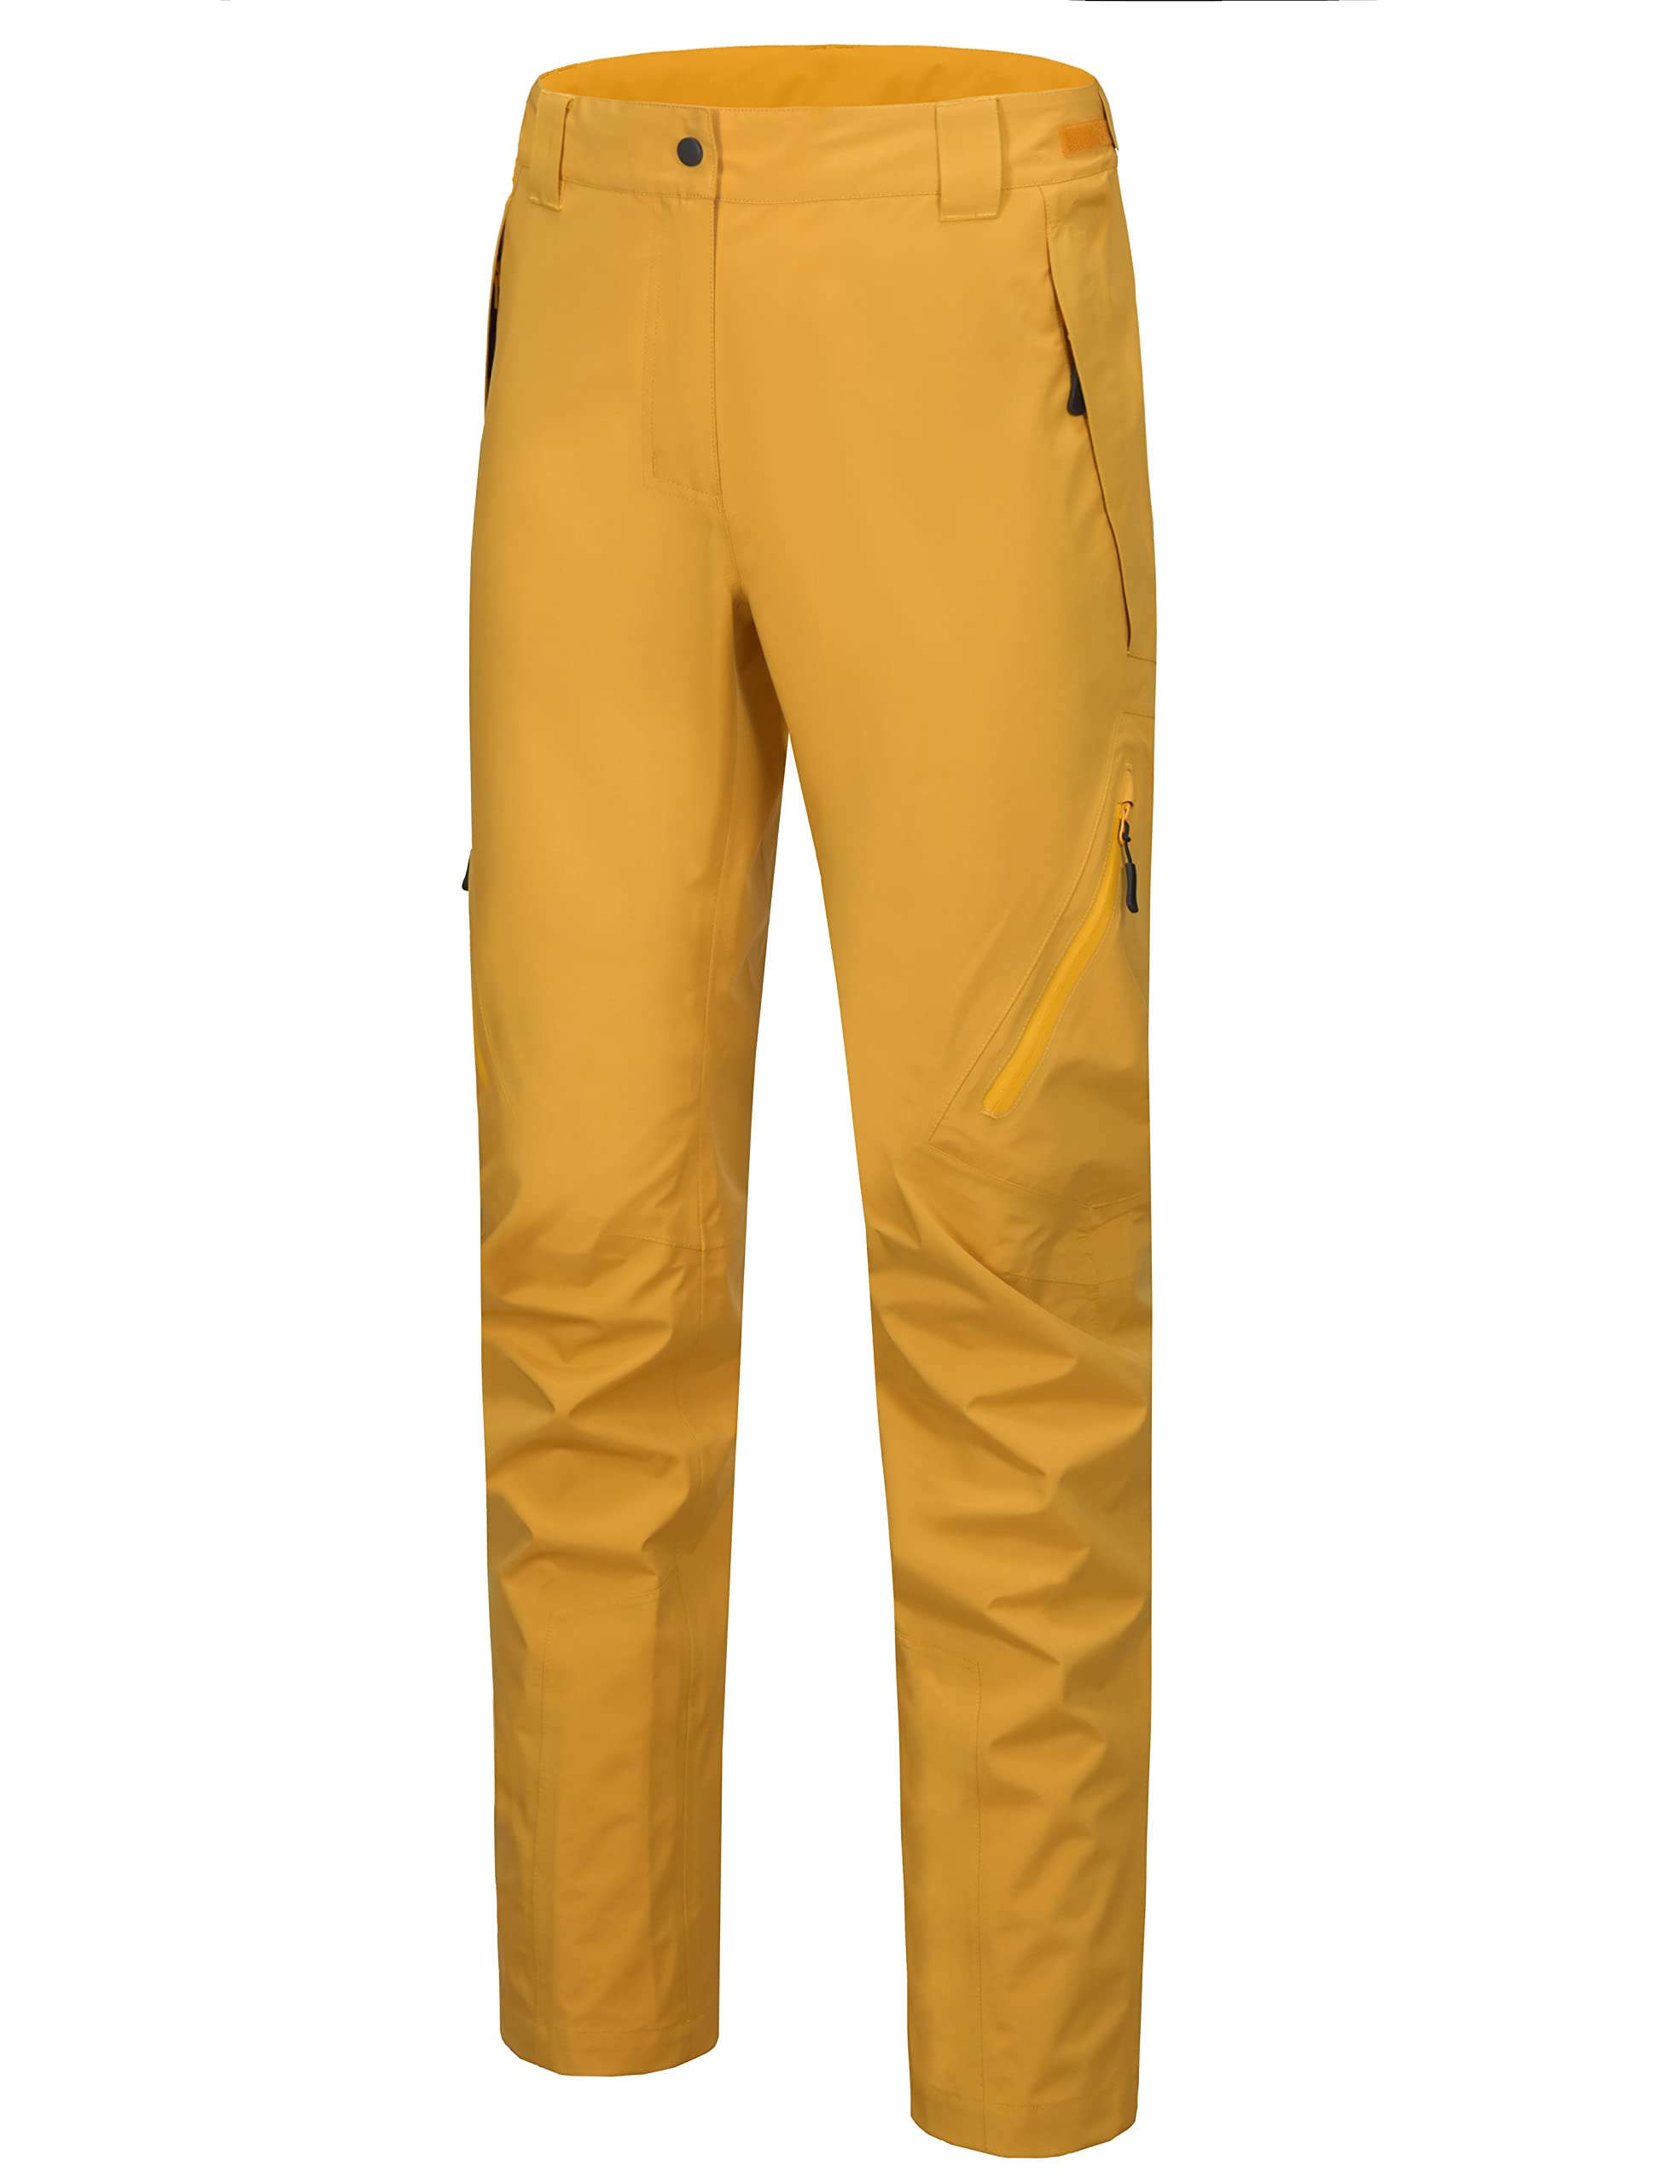 Little Donkey Andy Womens High Performance Waterproof Rain Pants Lightweight Breathable Golf Hiking Pants Ceylon Yellow L